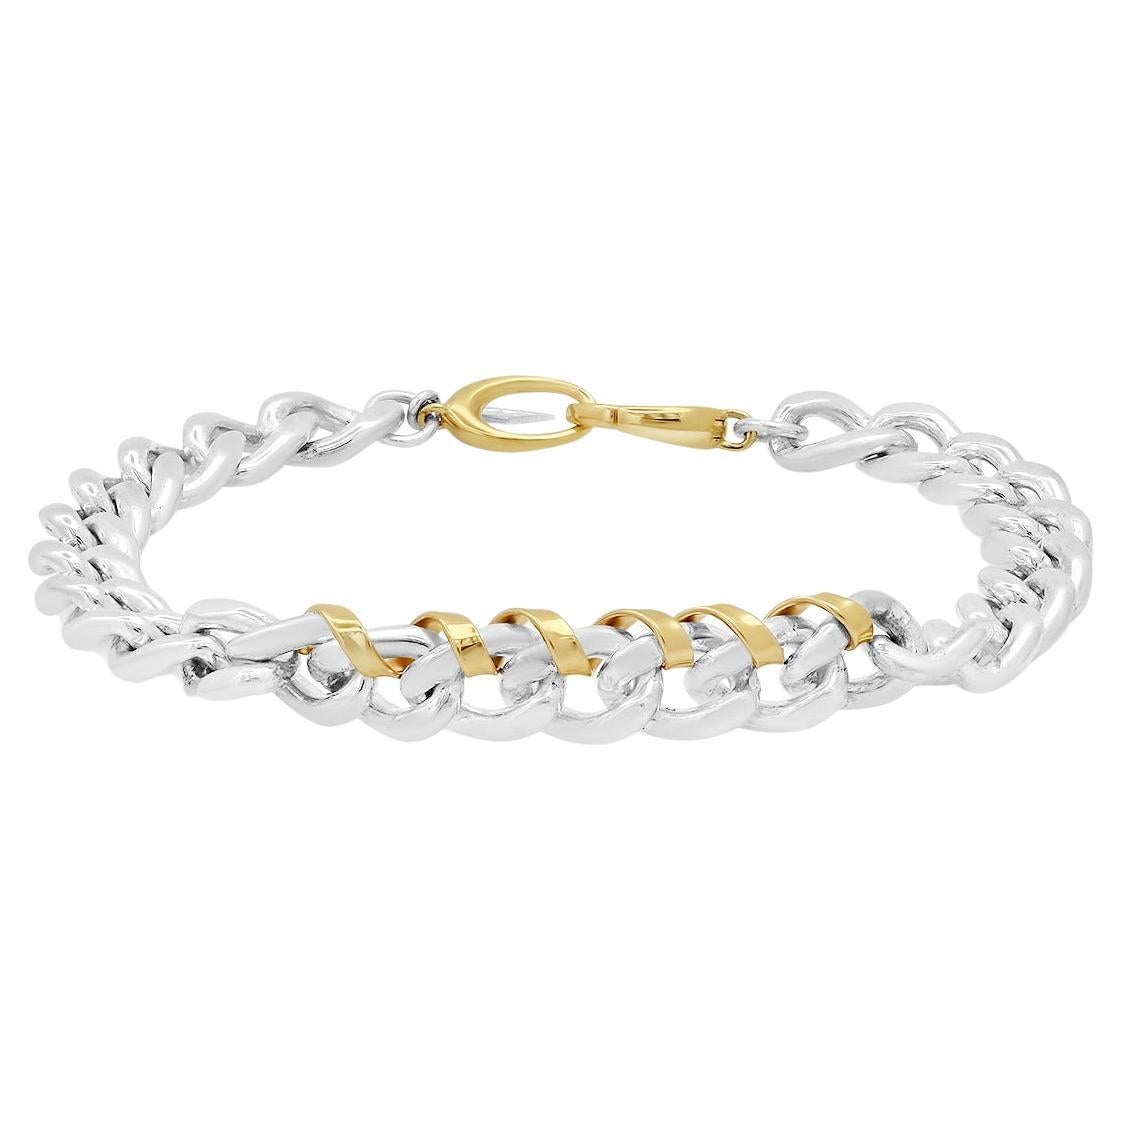 Sterling Silver "Heavy Metal" Wrap-Me-Up Chain Bracelet w/ 14K Gold: Size M/L For Sale